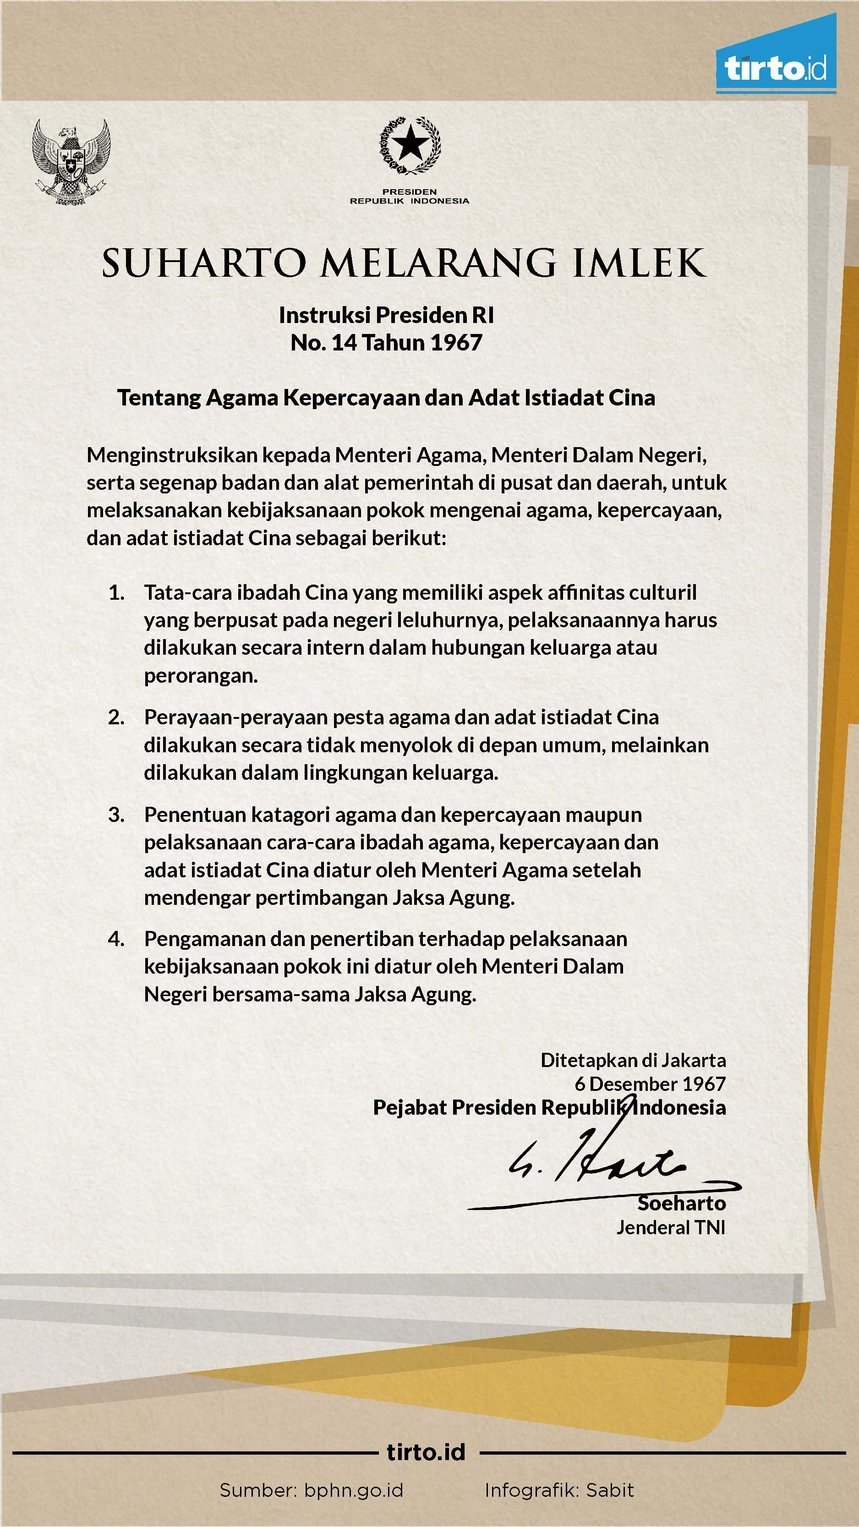 Infografik Surat Imlek Suharto